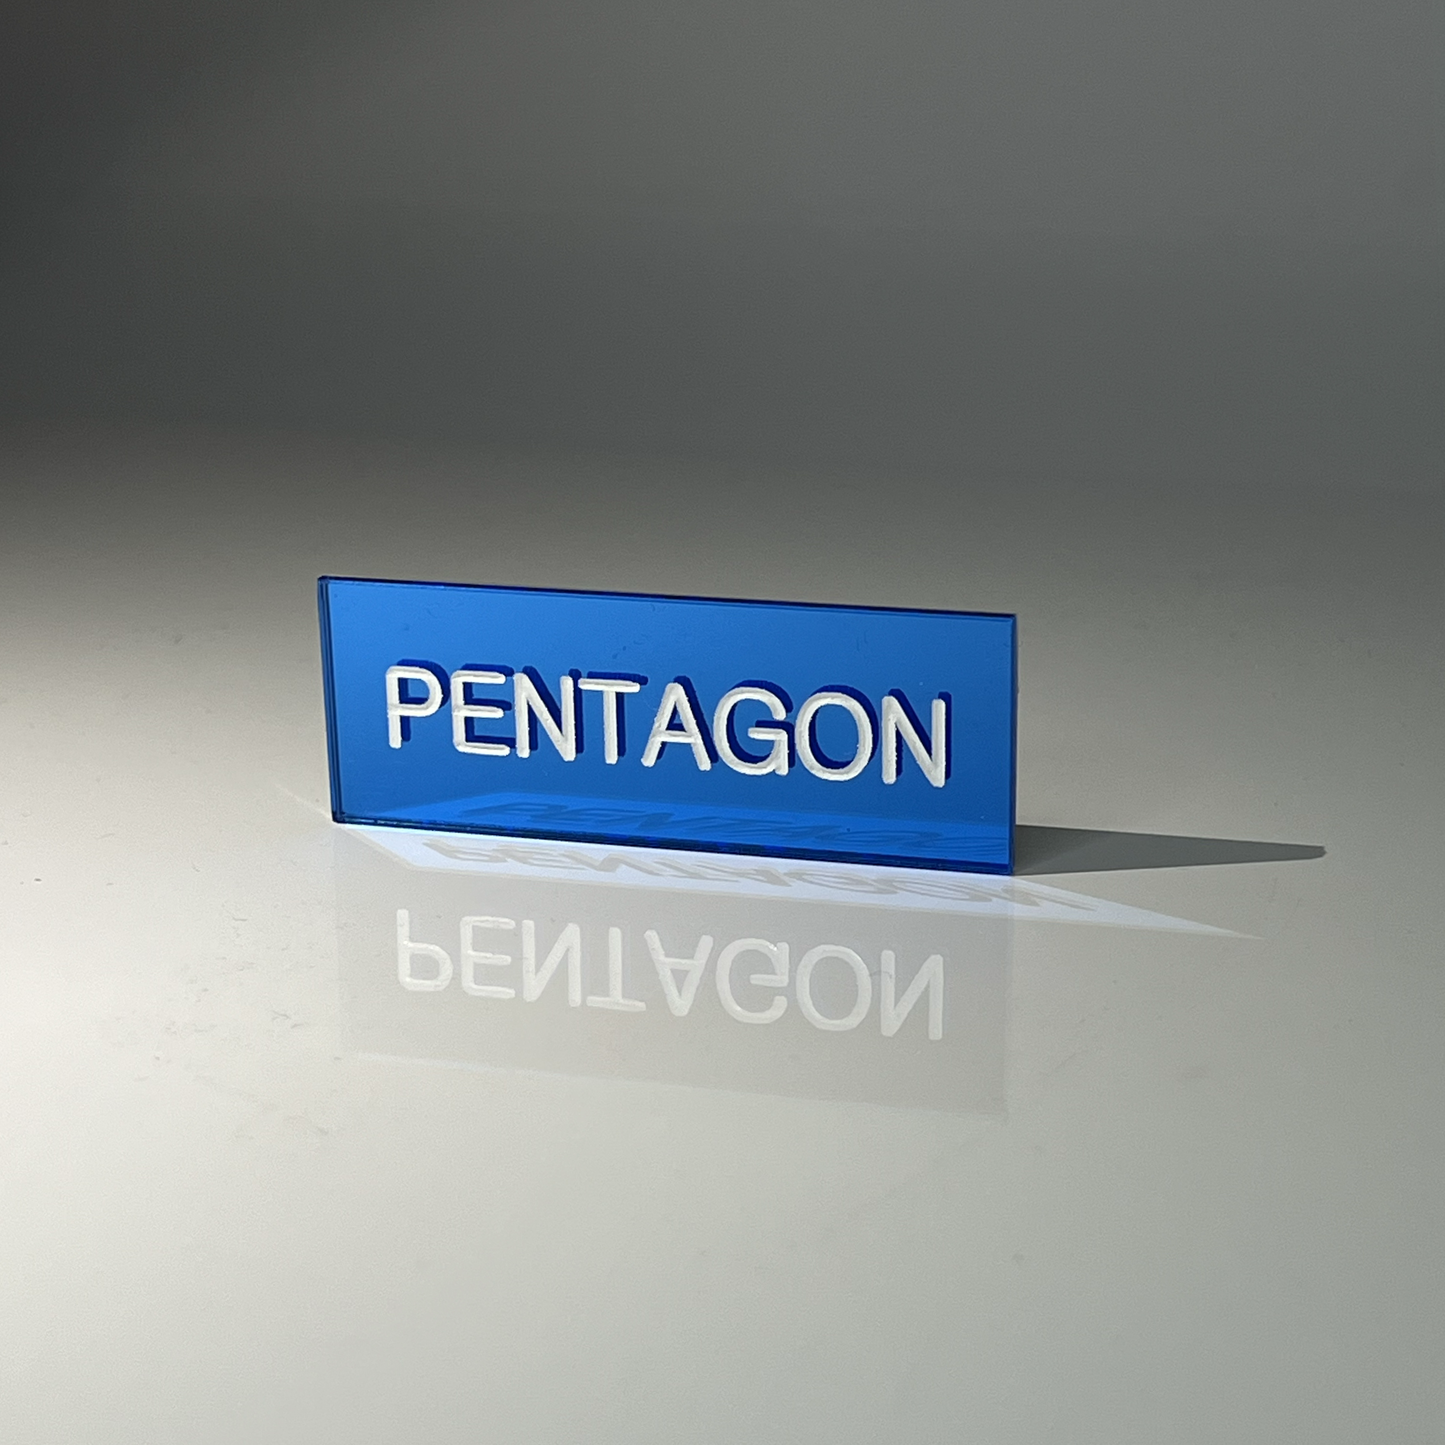 Pentagon Name Badge